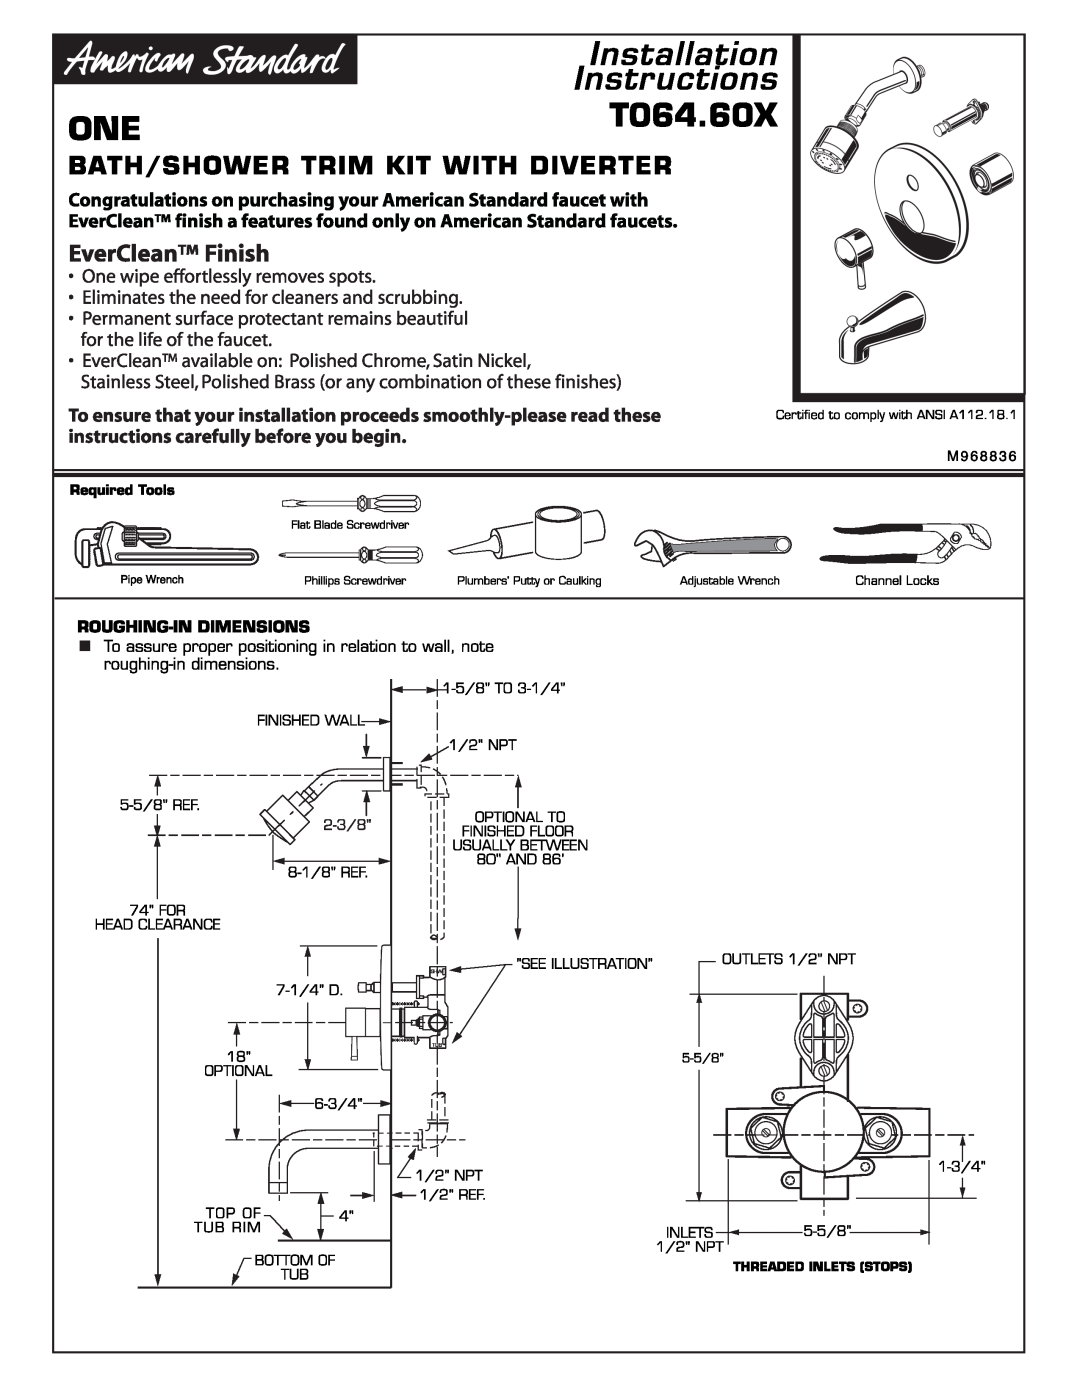 American Standard installation instructions SERINT064.60X, Installation Instructions 